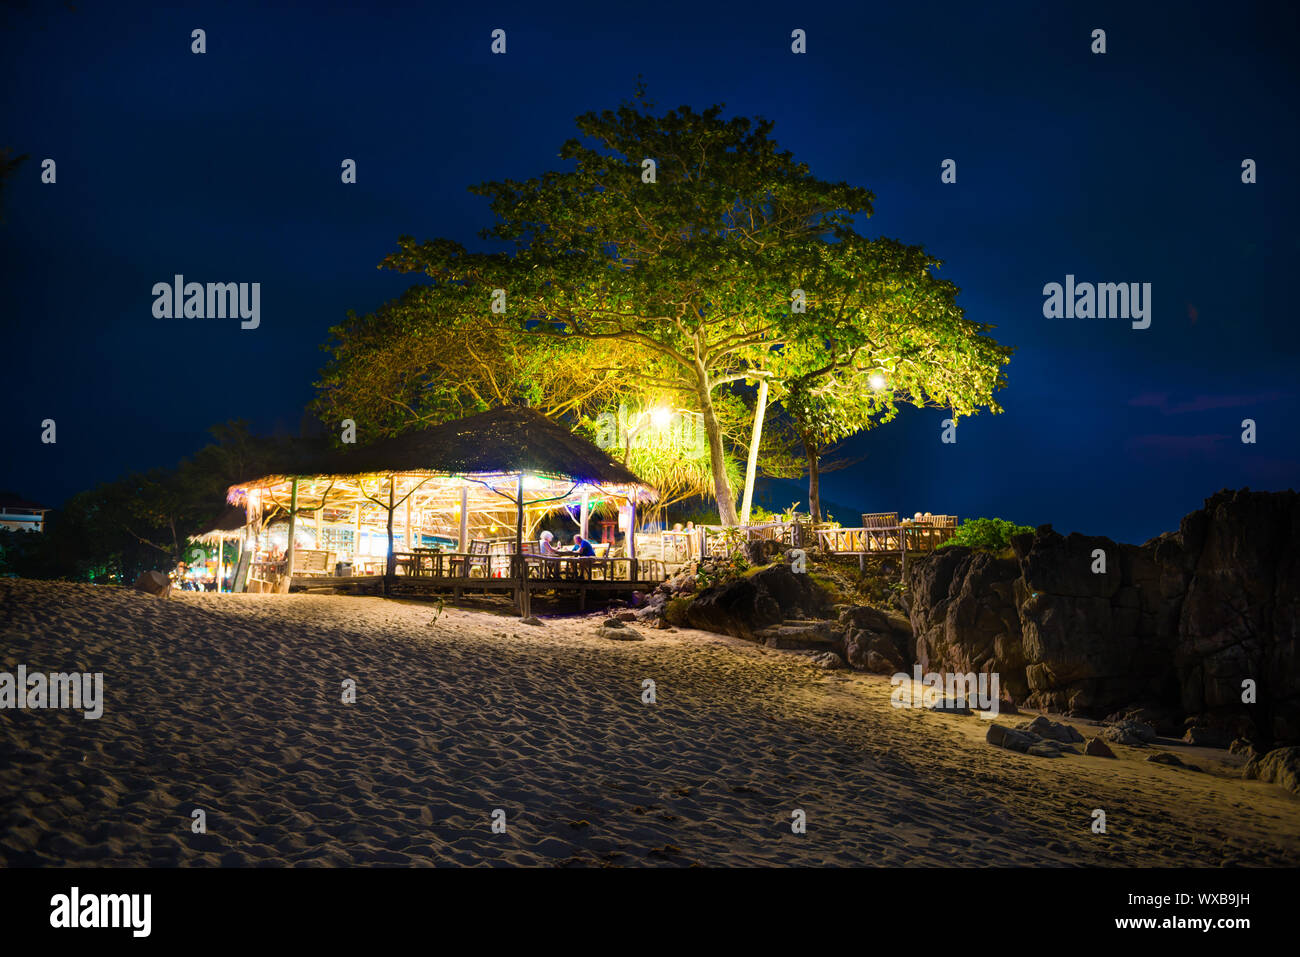 Restaurant at sand beach on blue night sky background Stock Photo